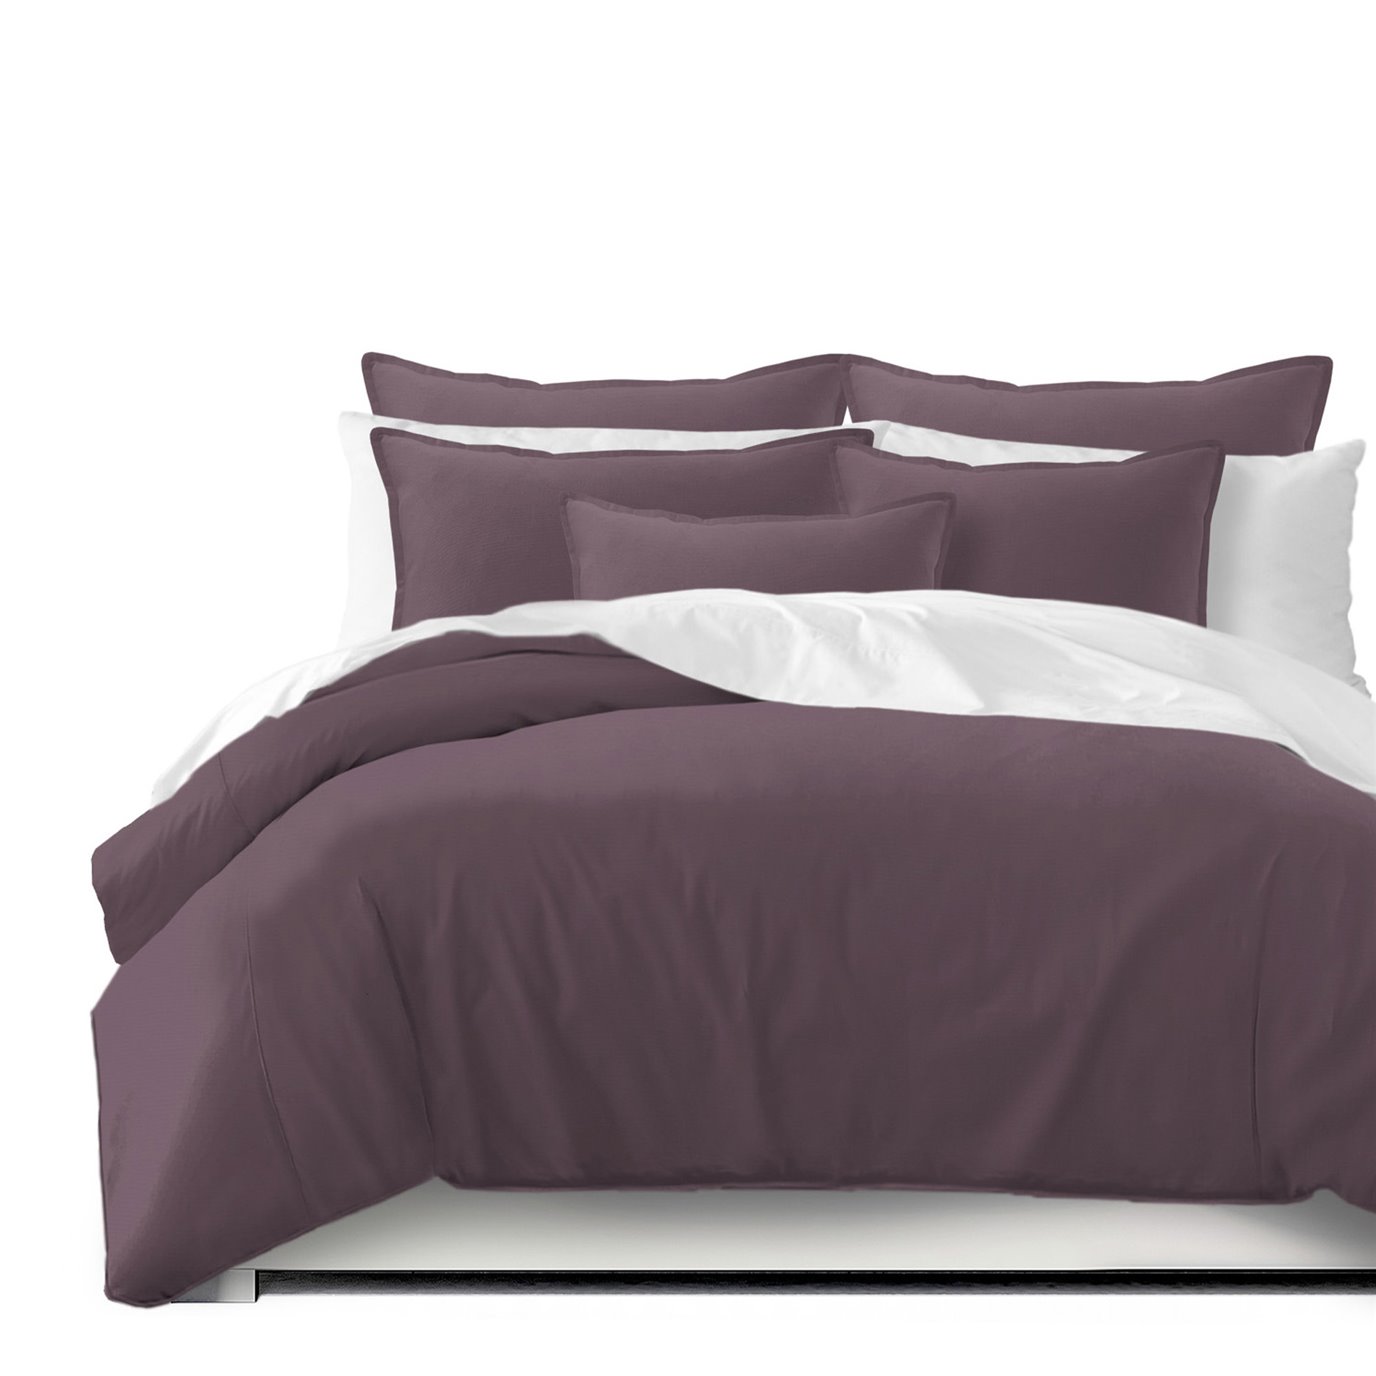 Braxton Purple Grape Comforter and Pillow Sham(s) Set - Size Twin